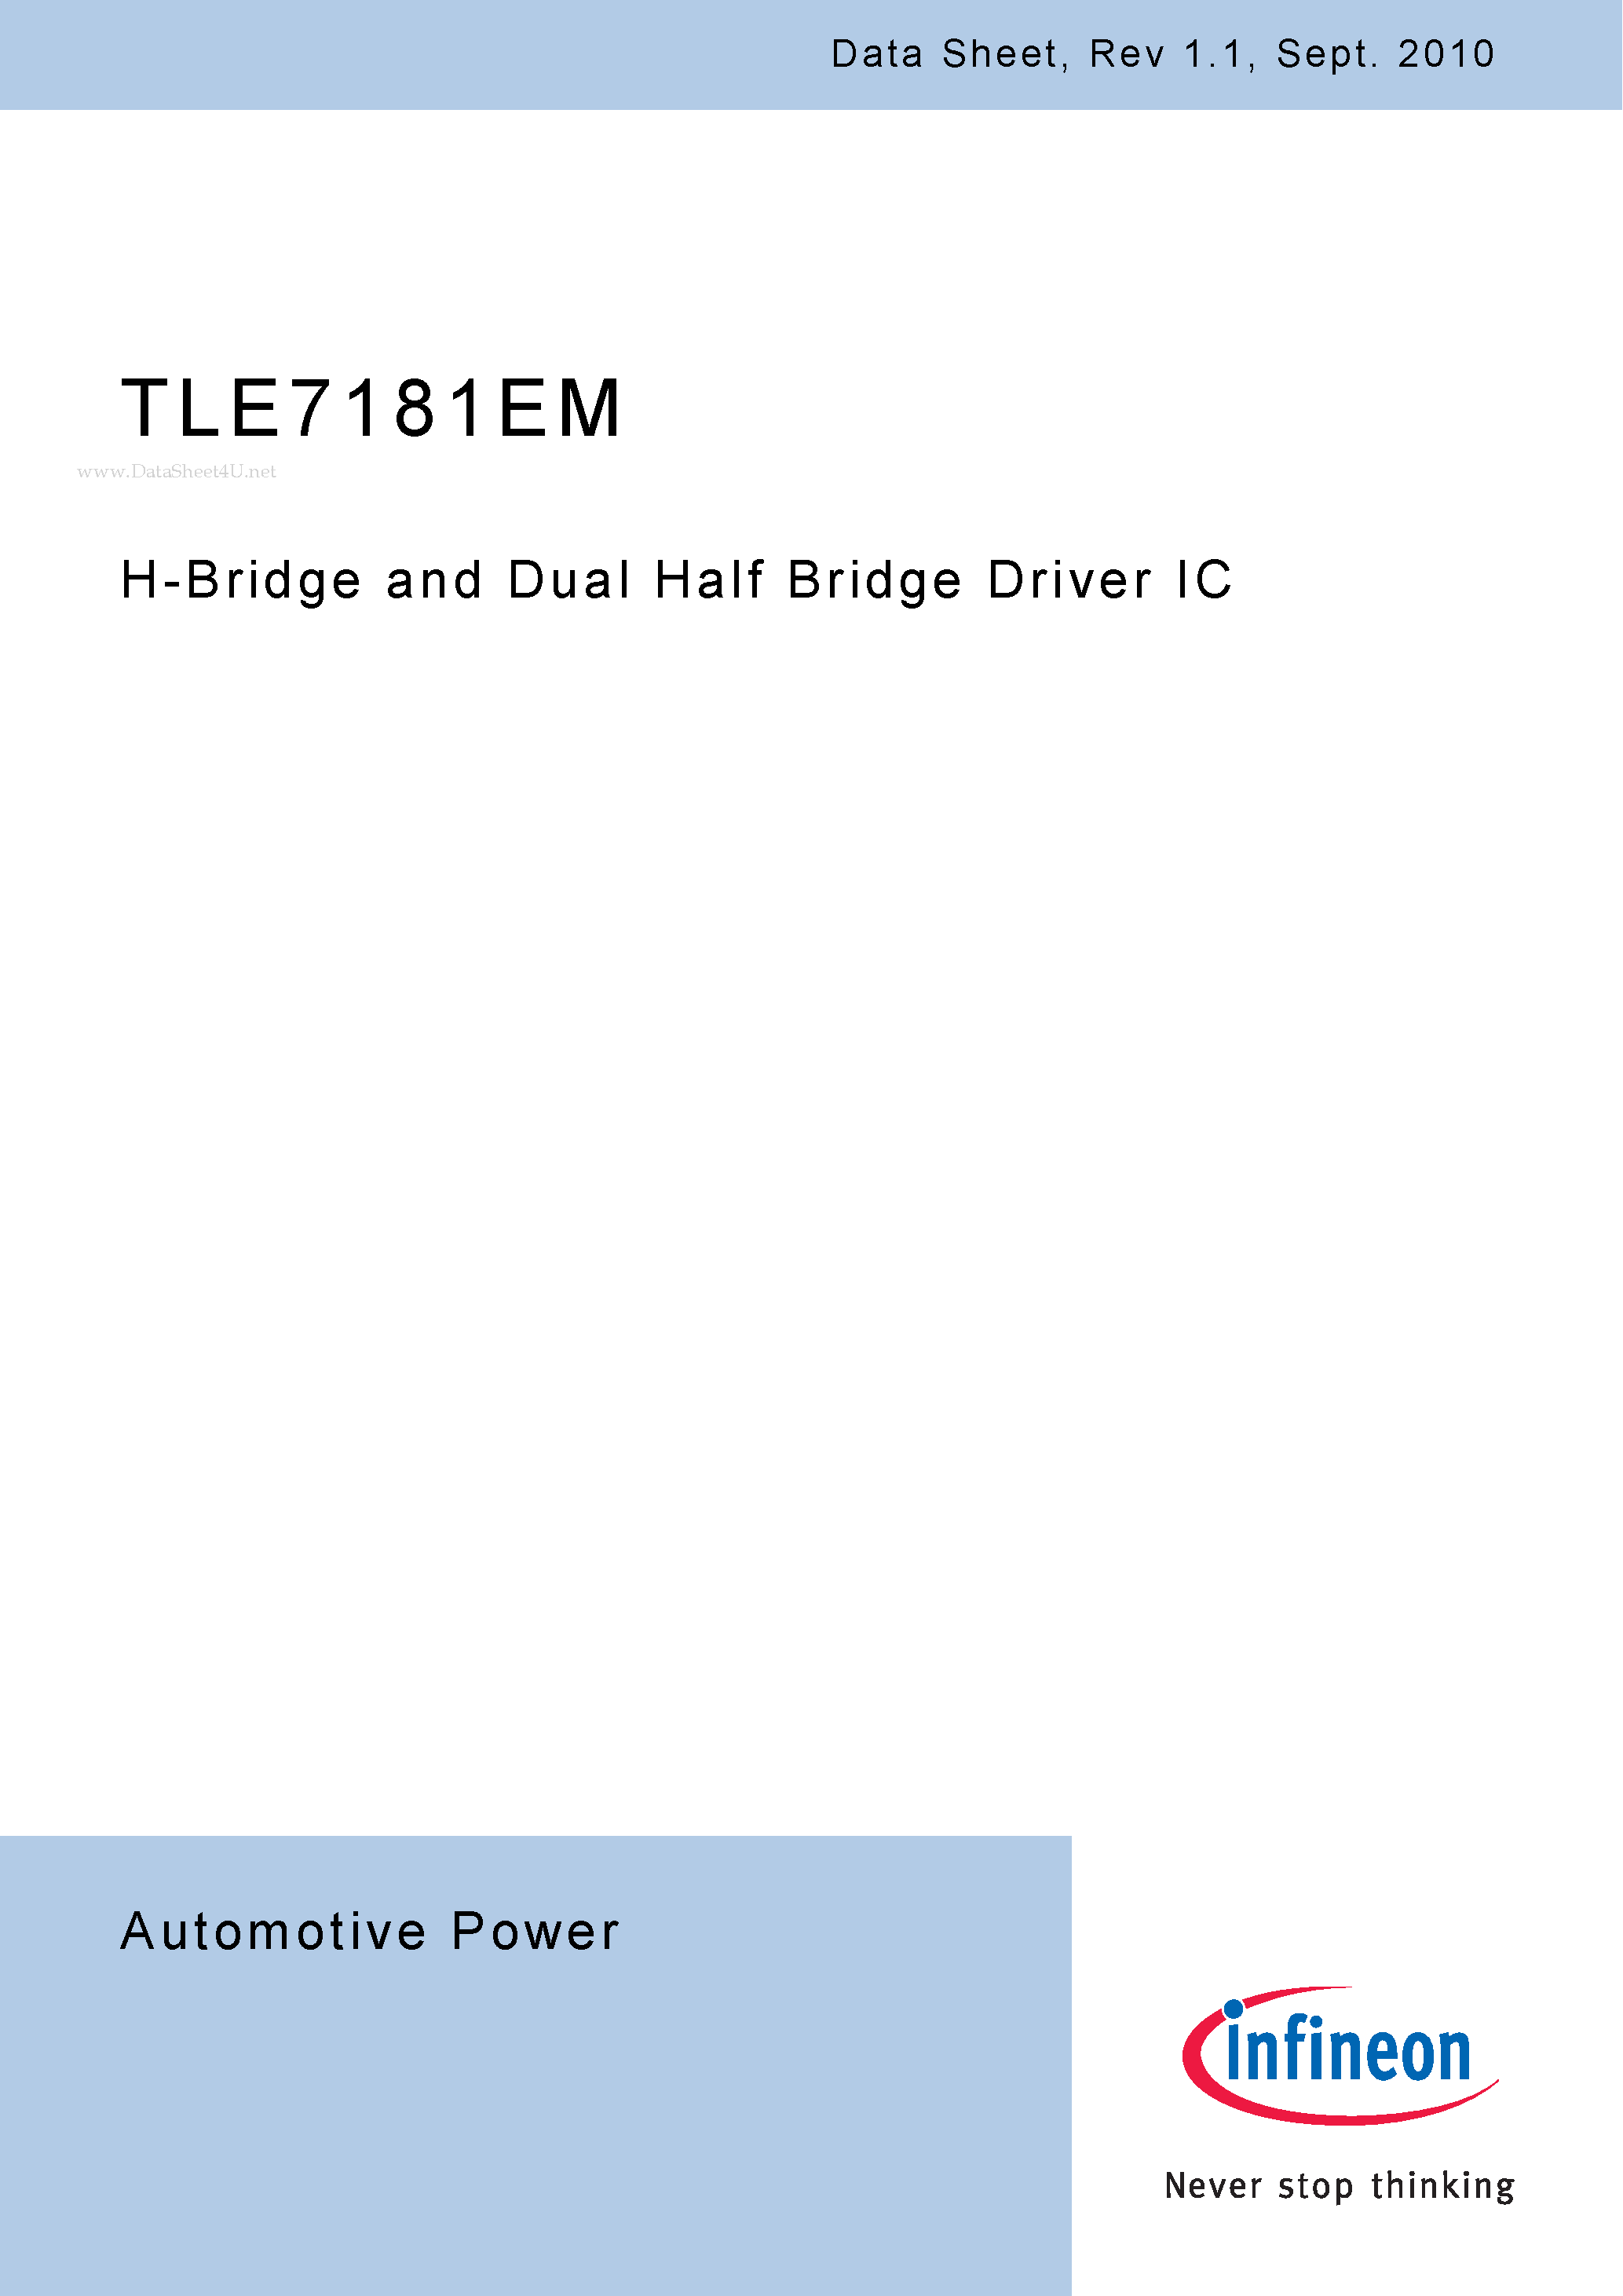 Datasheet TLE7181EM - H-Bridge and Dual Half Bridge Driver IC page 1